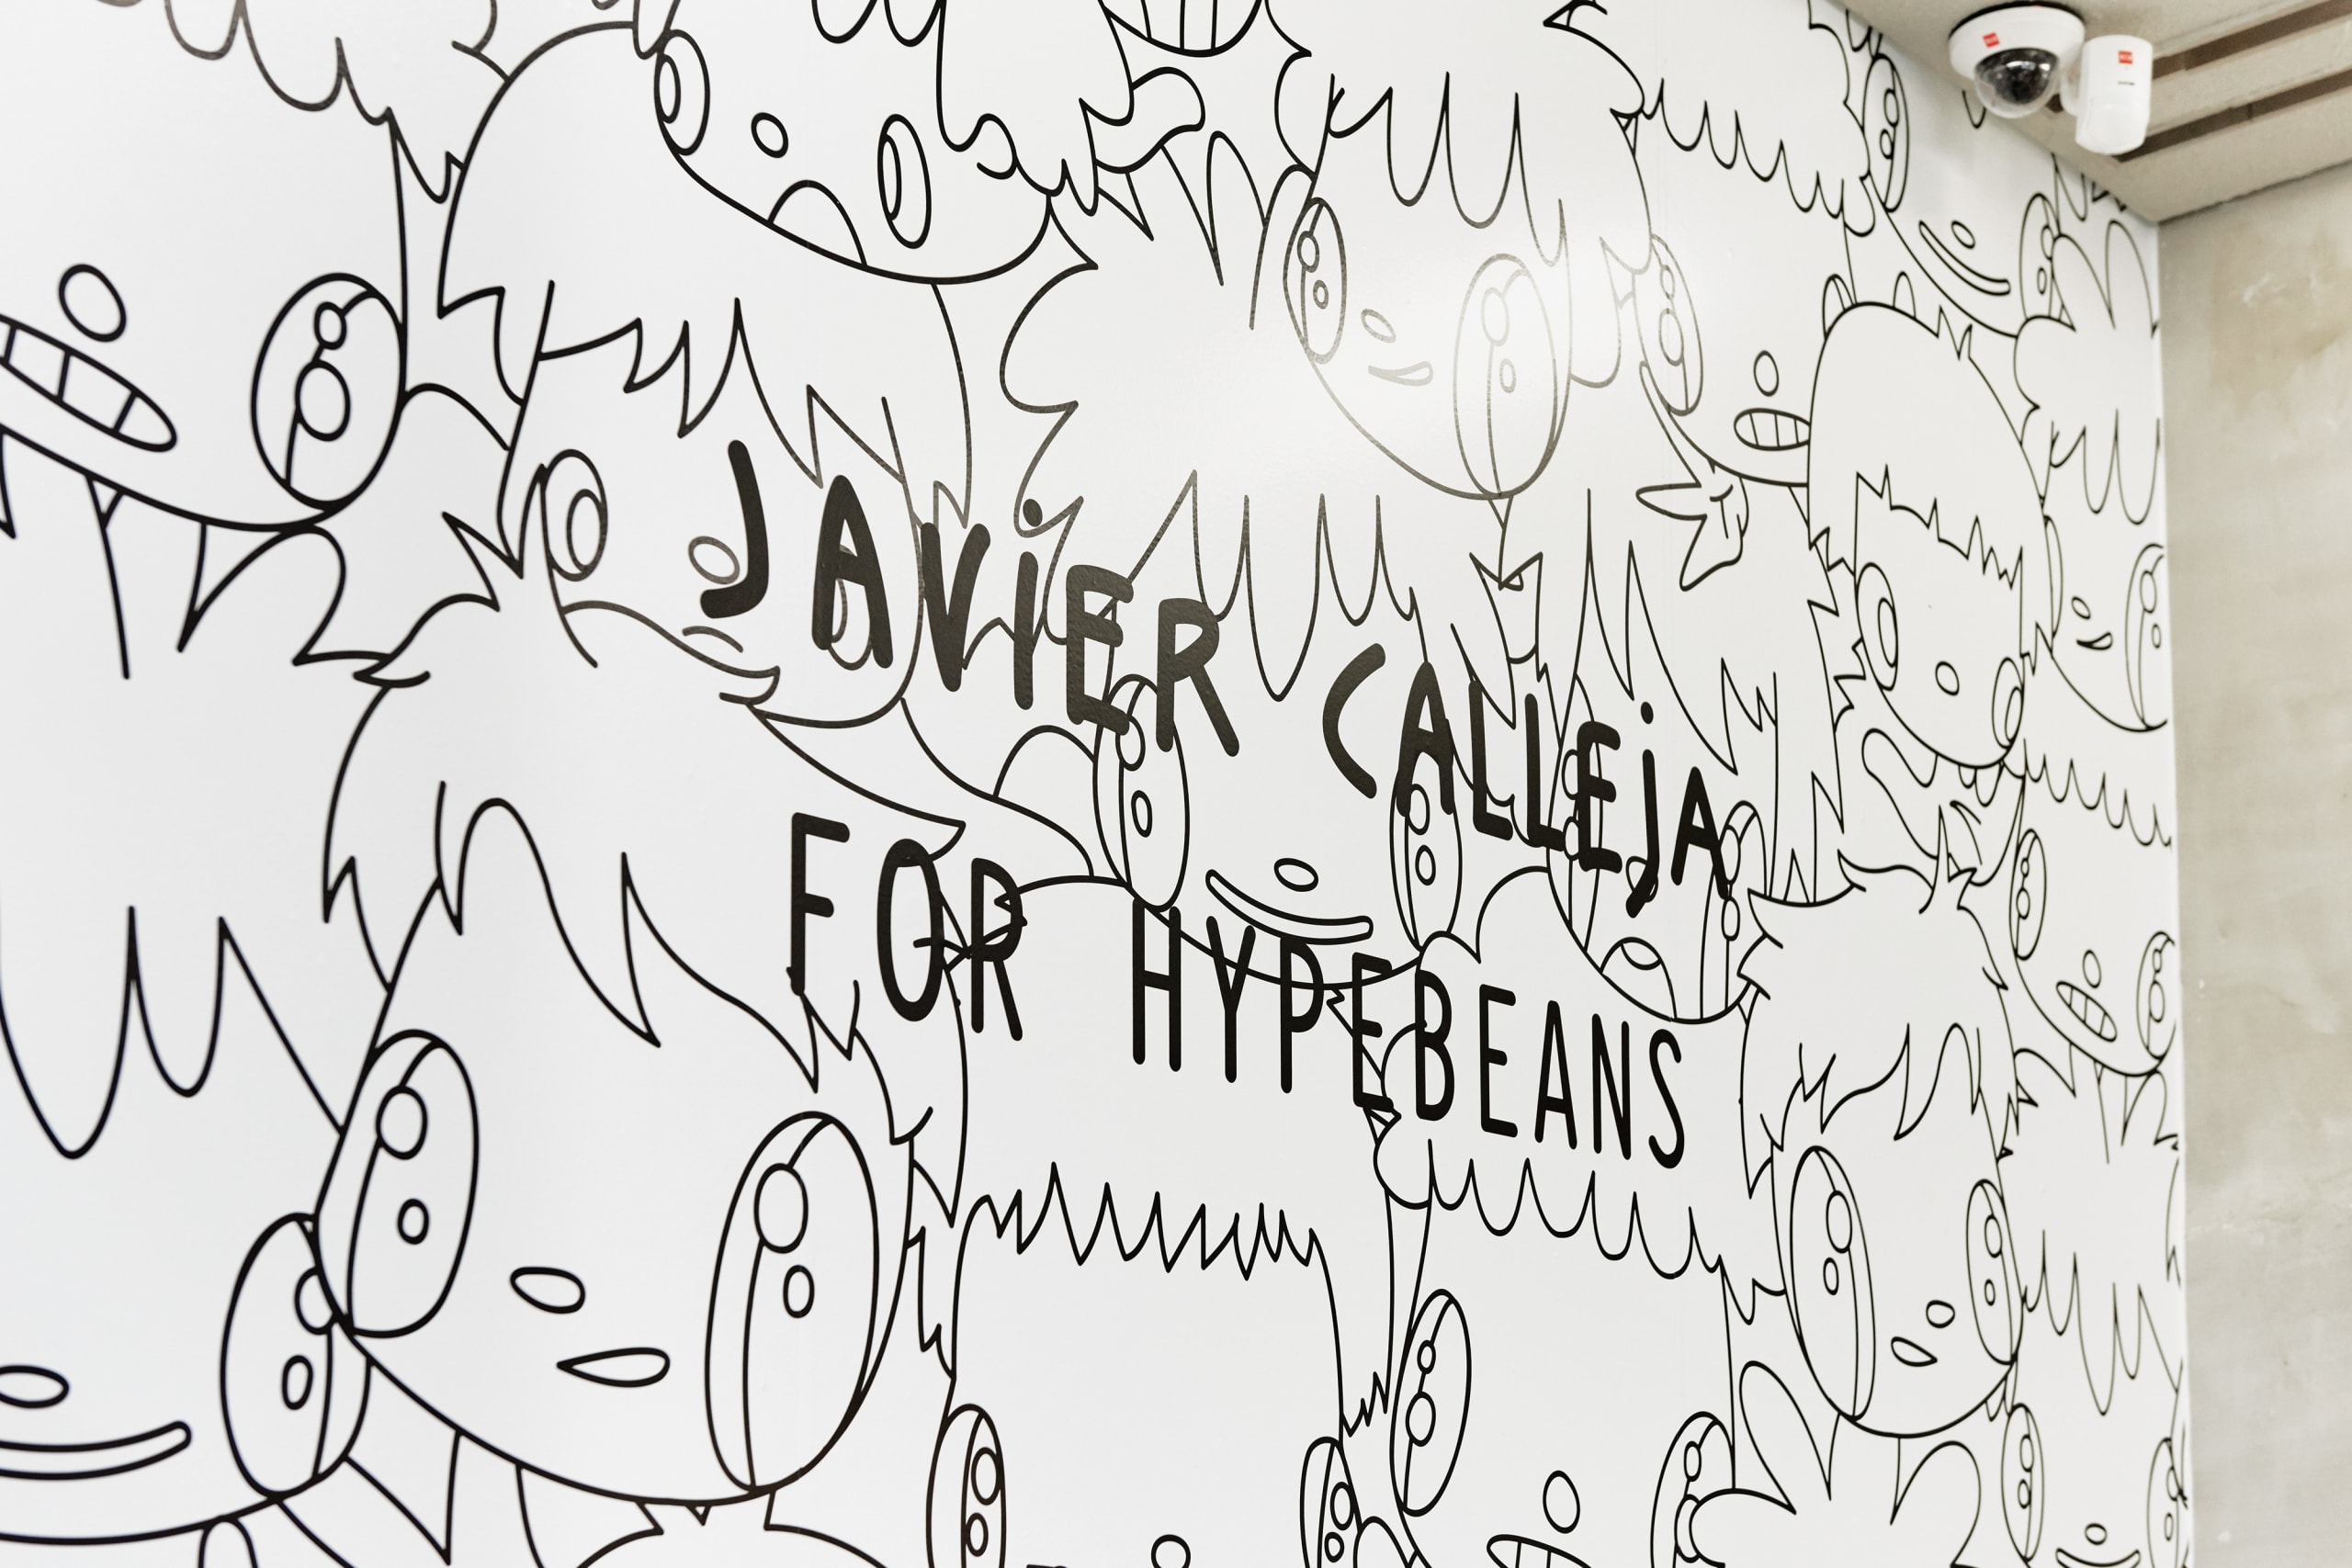 HYPEBEANS 攜手西班牙藝術家 Javier Calleja 推出全新聯乘系列